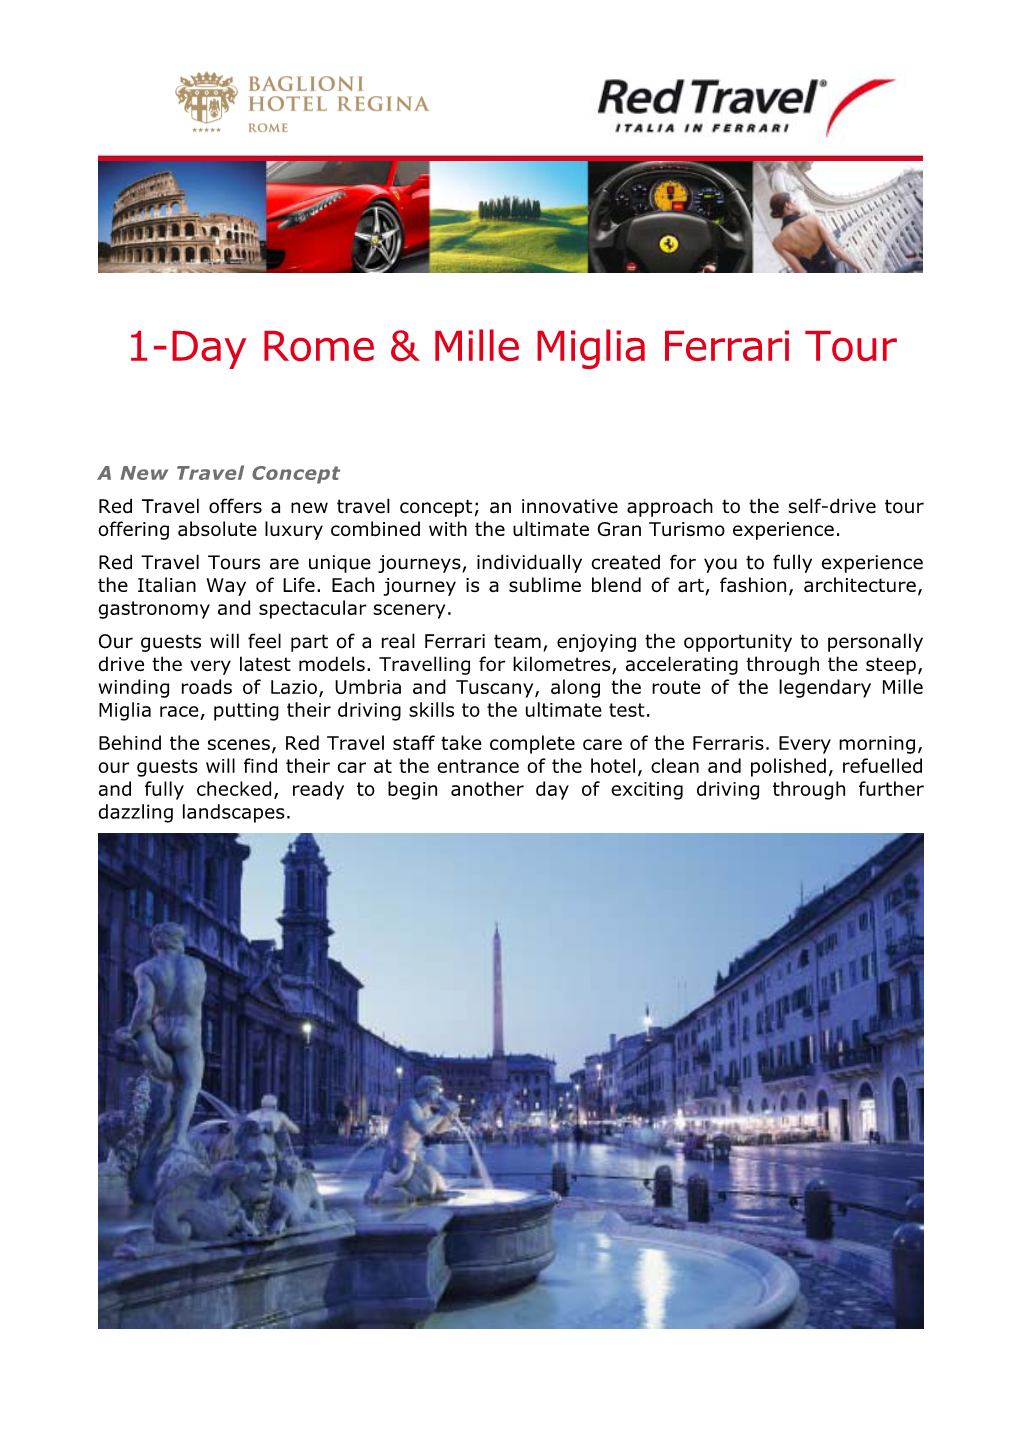 1-Day Rome & Mille Miglia Ferrari Tour